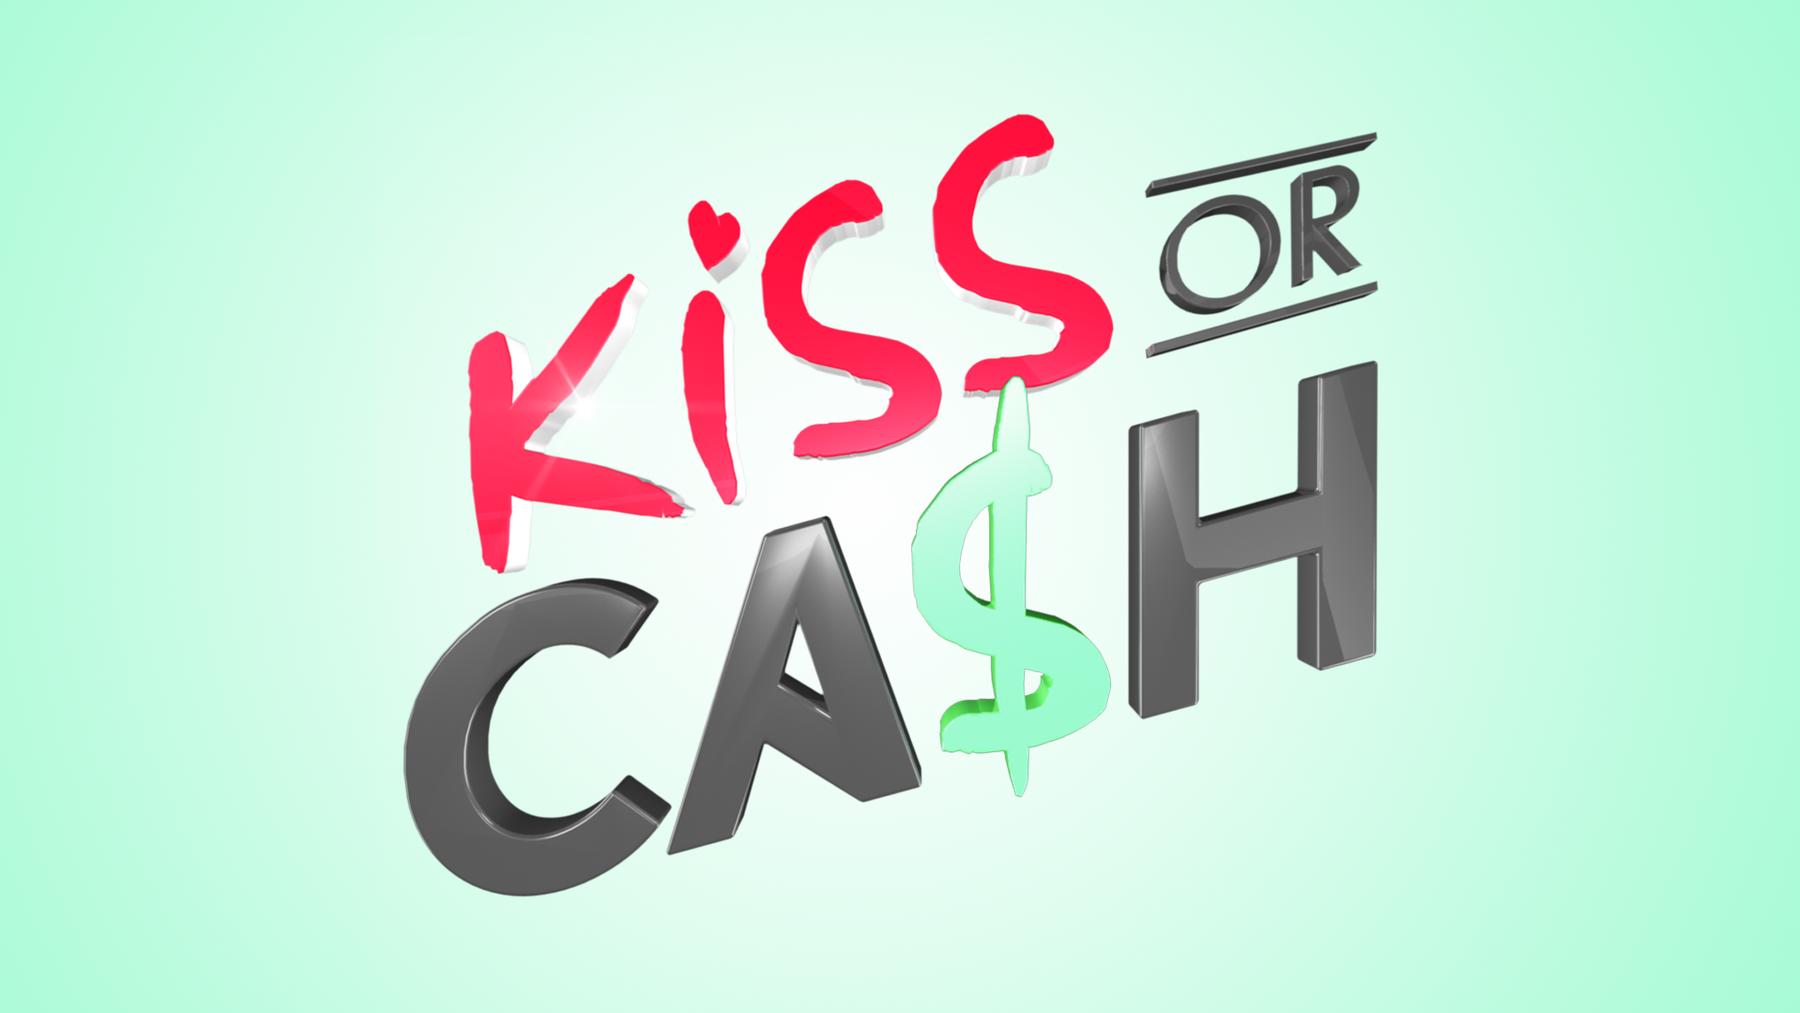 KISS OR CASH